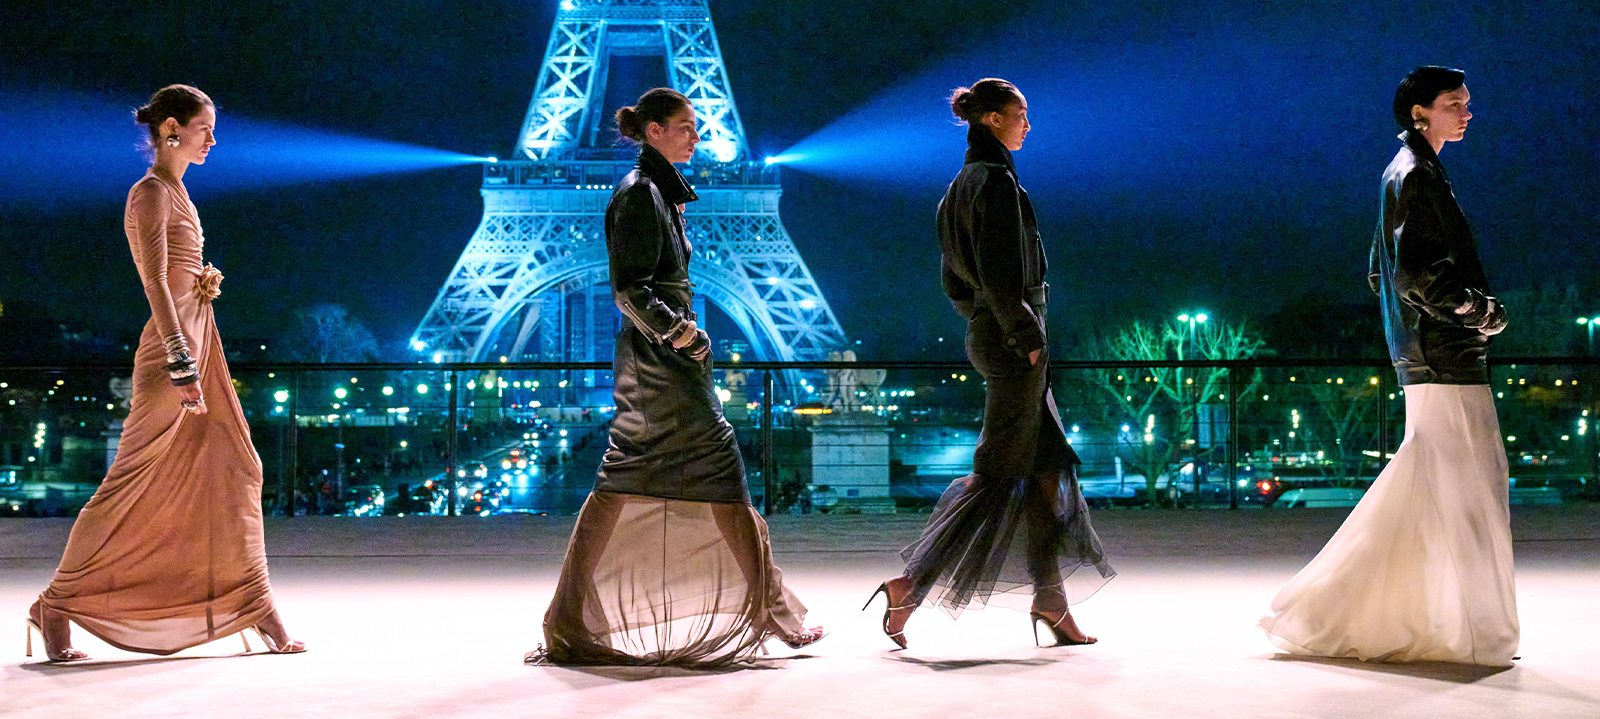 autumn winter 2022 fashion trends: Saint Laurent maxi skirts